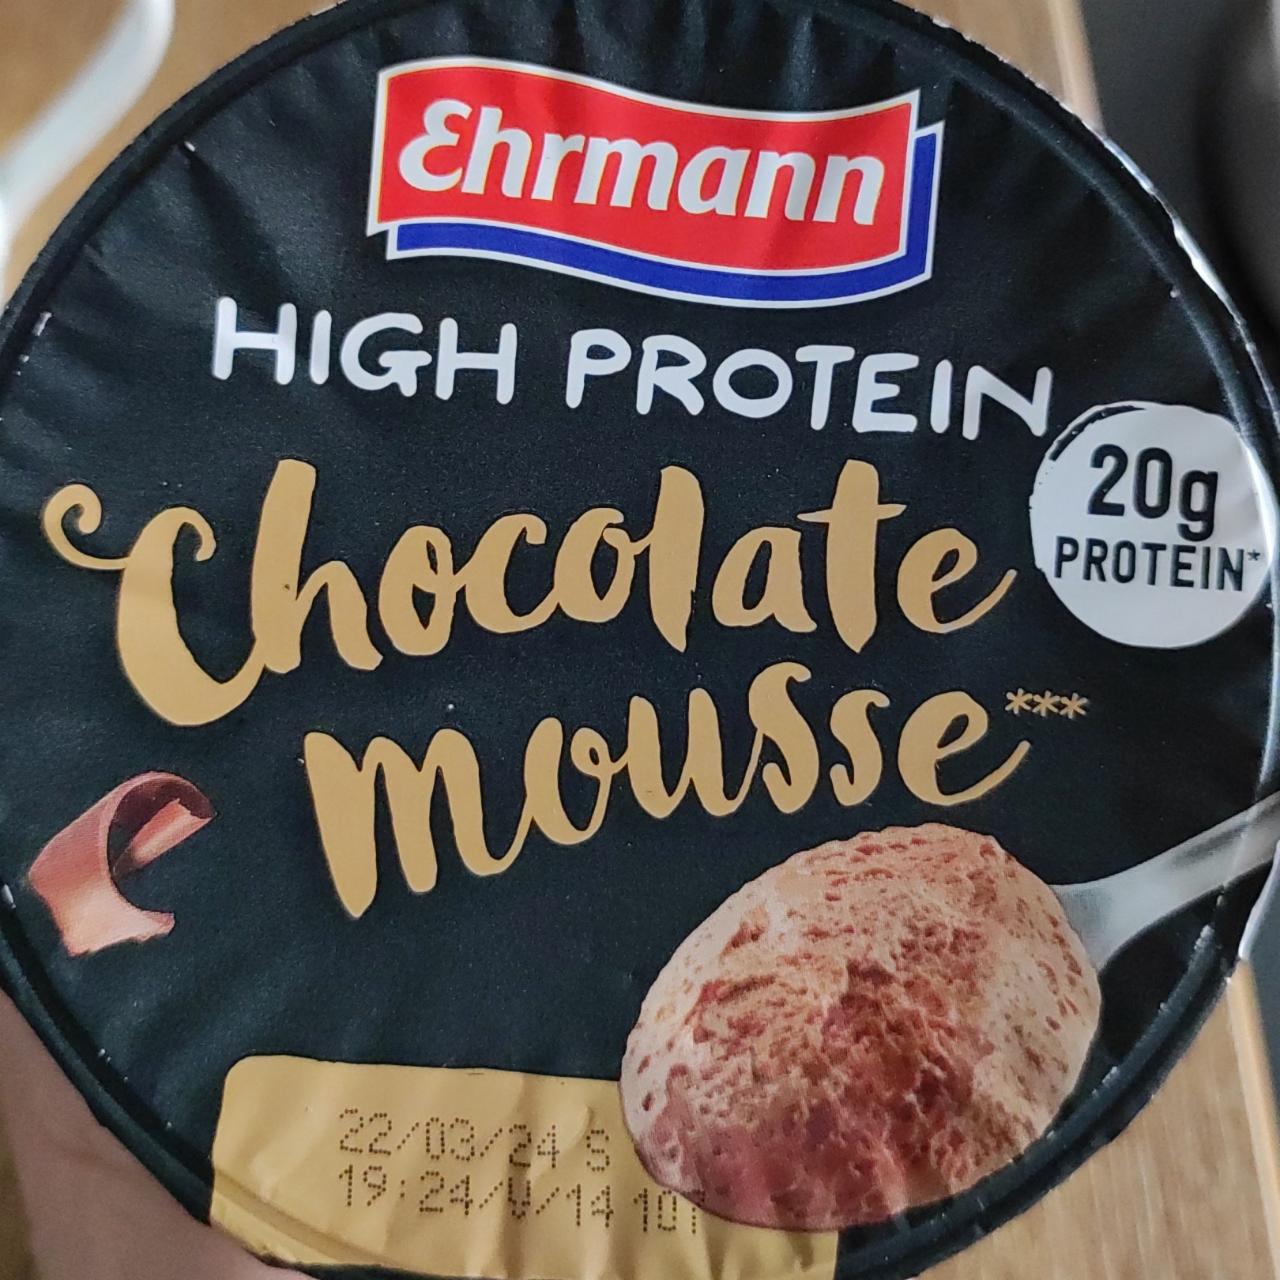 Képek - High protein chocolate mousse Ehrmann